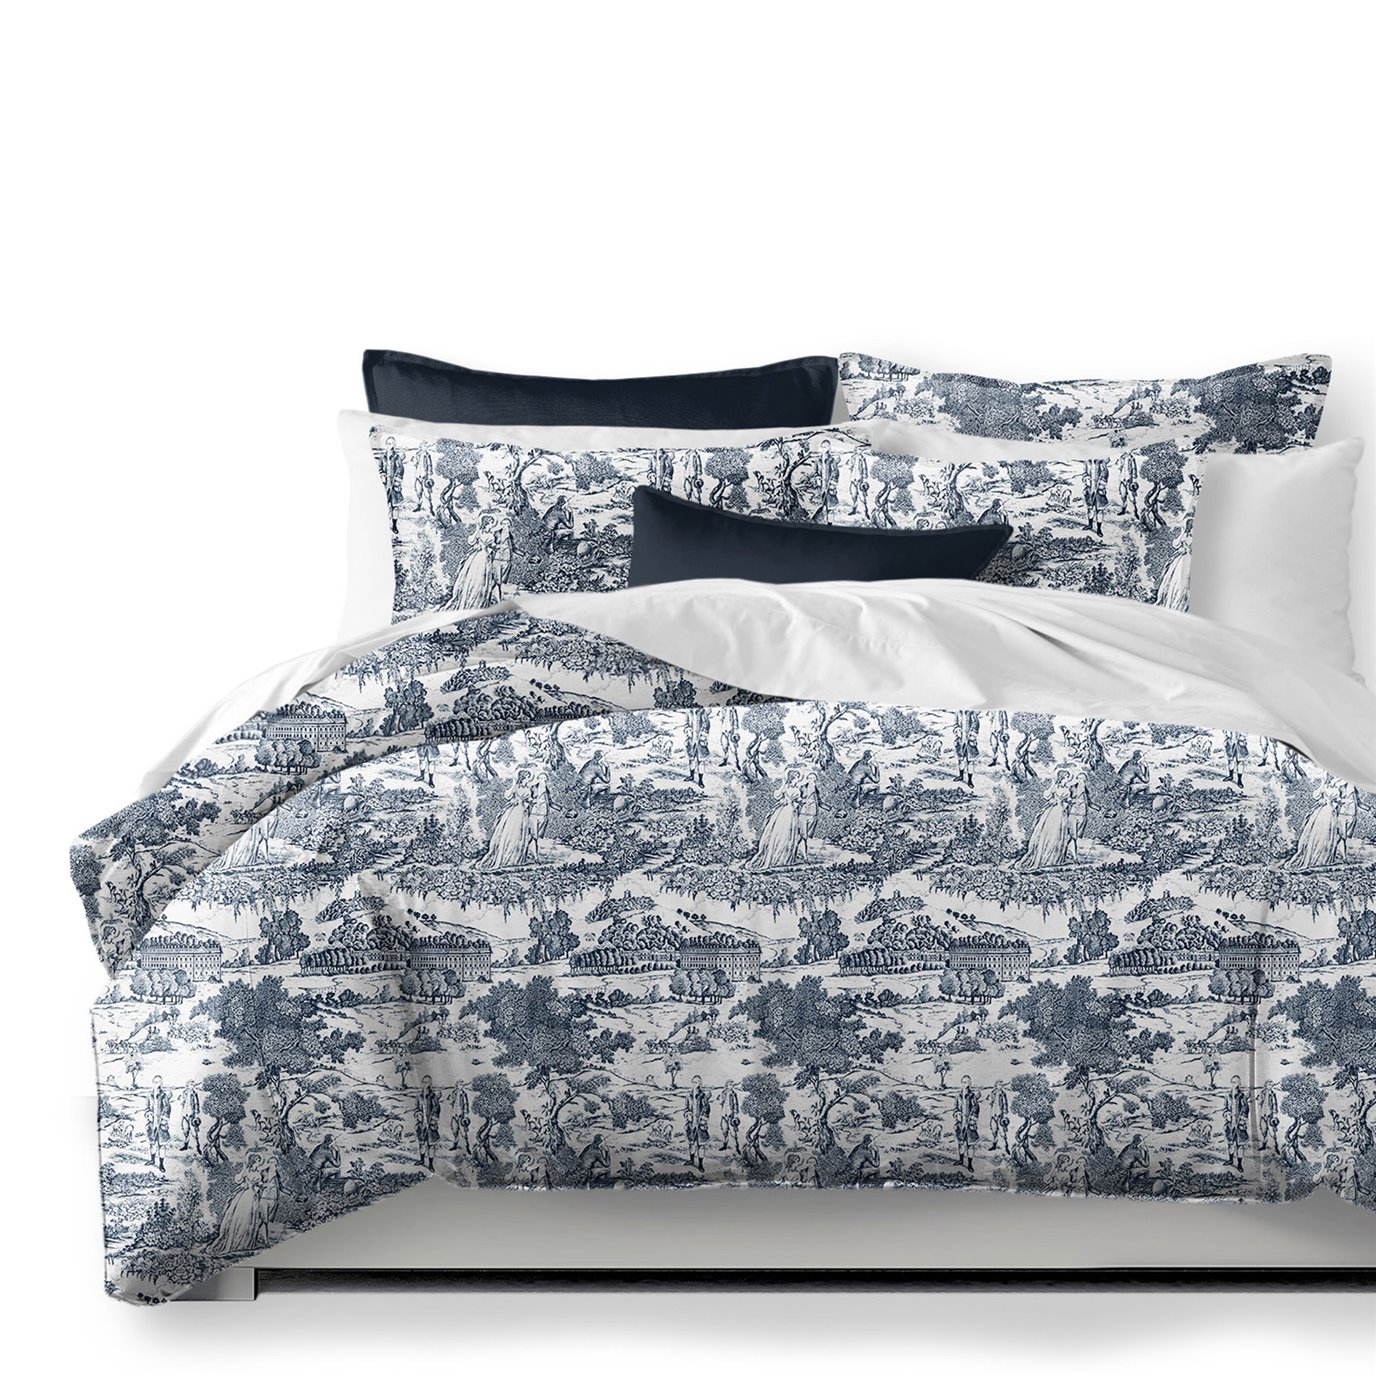 Beau Toile Blue Duvet Cover and Pillow Sham(s) Set - Size Queen